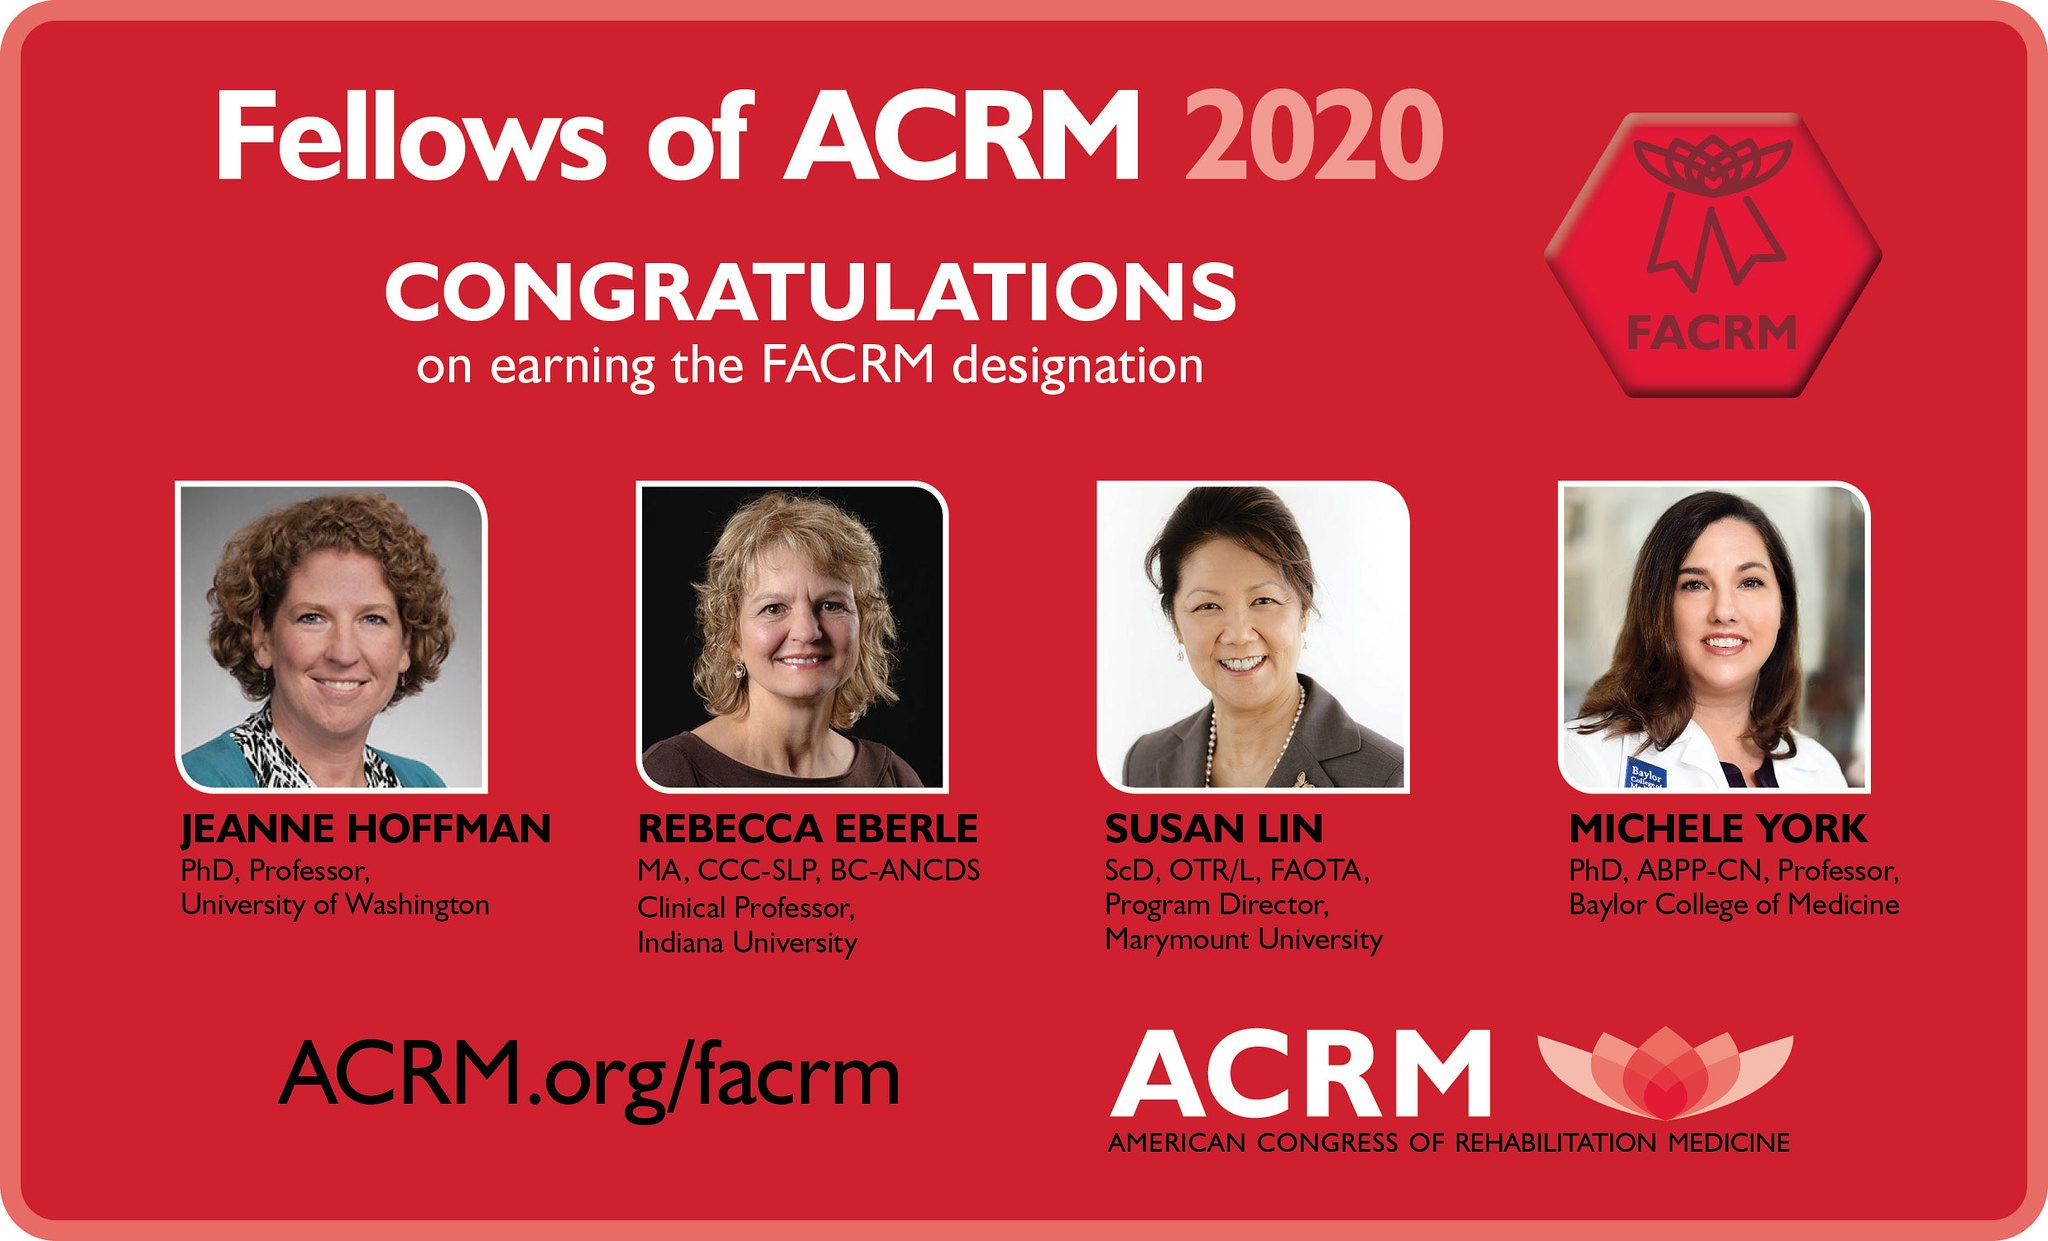 Congratulations to the 2020 Fellows of ACRM